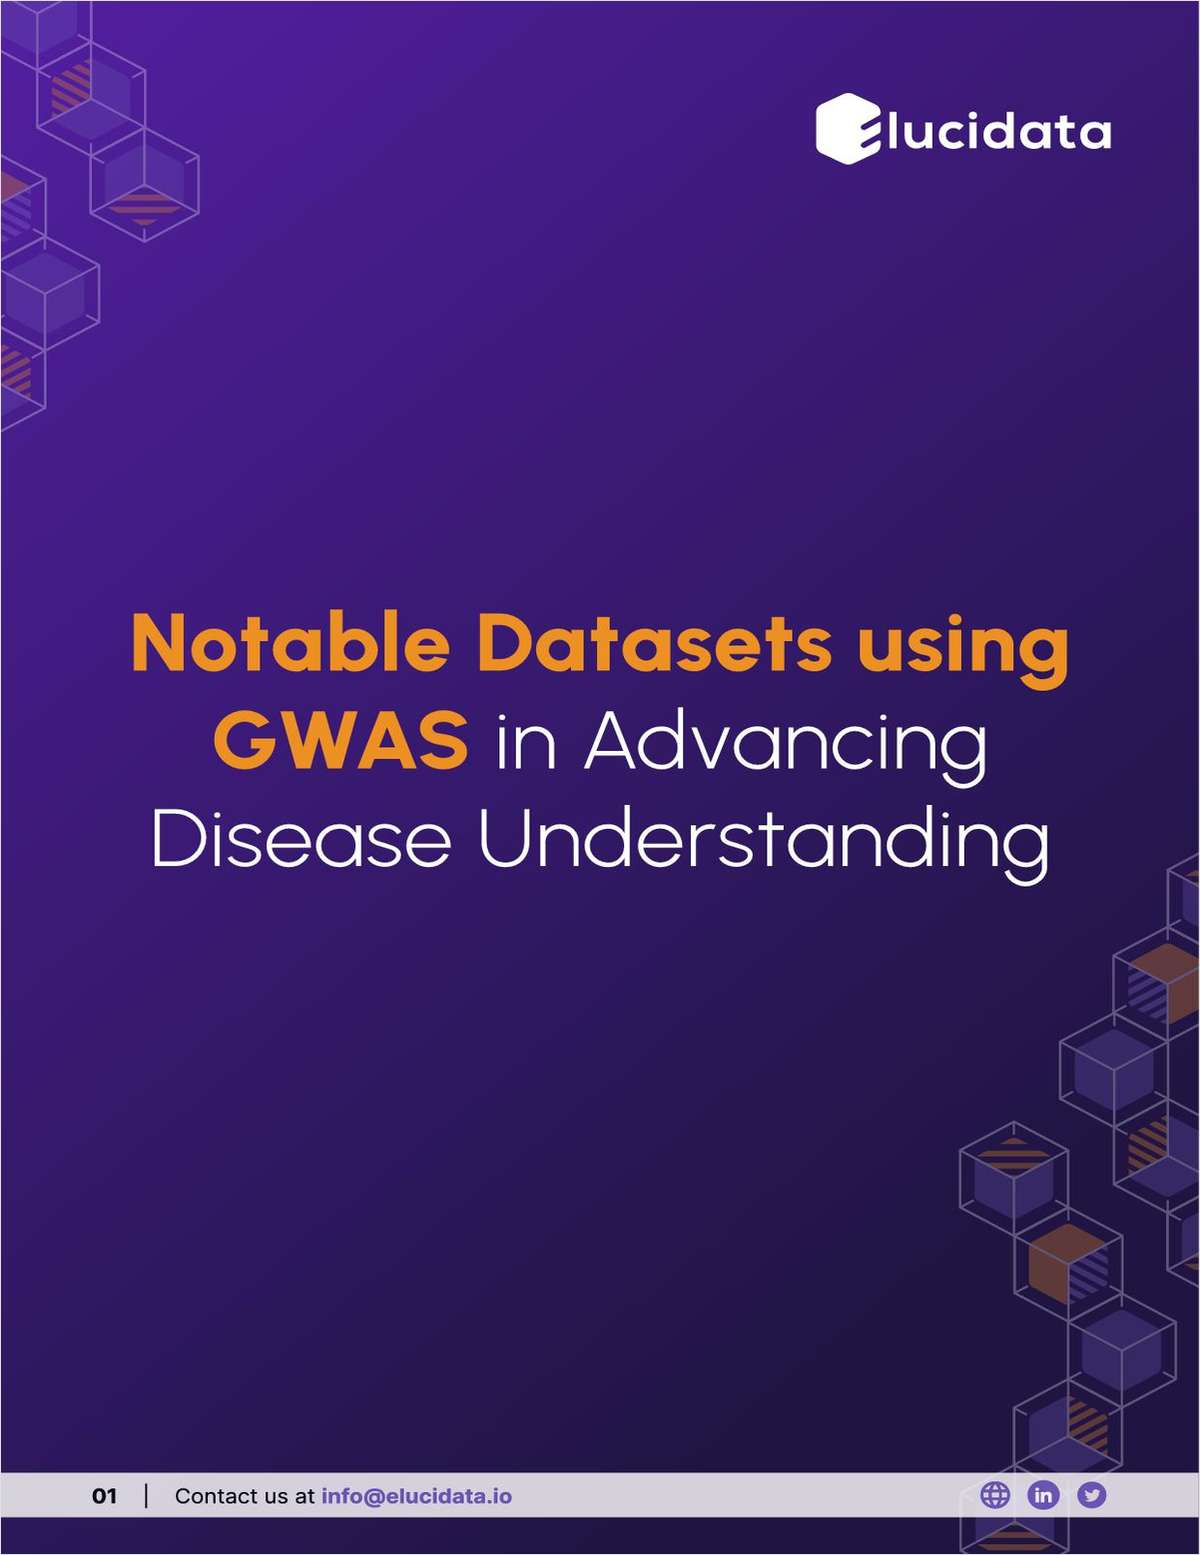 Notable Datasets Using GWAS in Advancing Disease Understanding